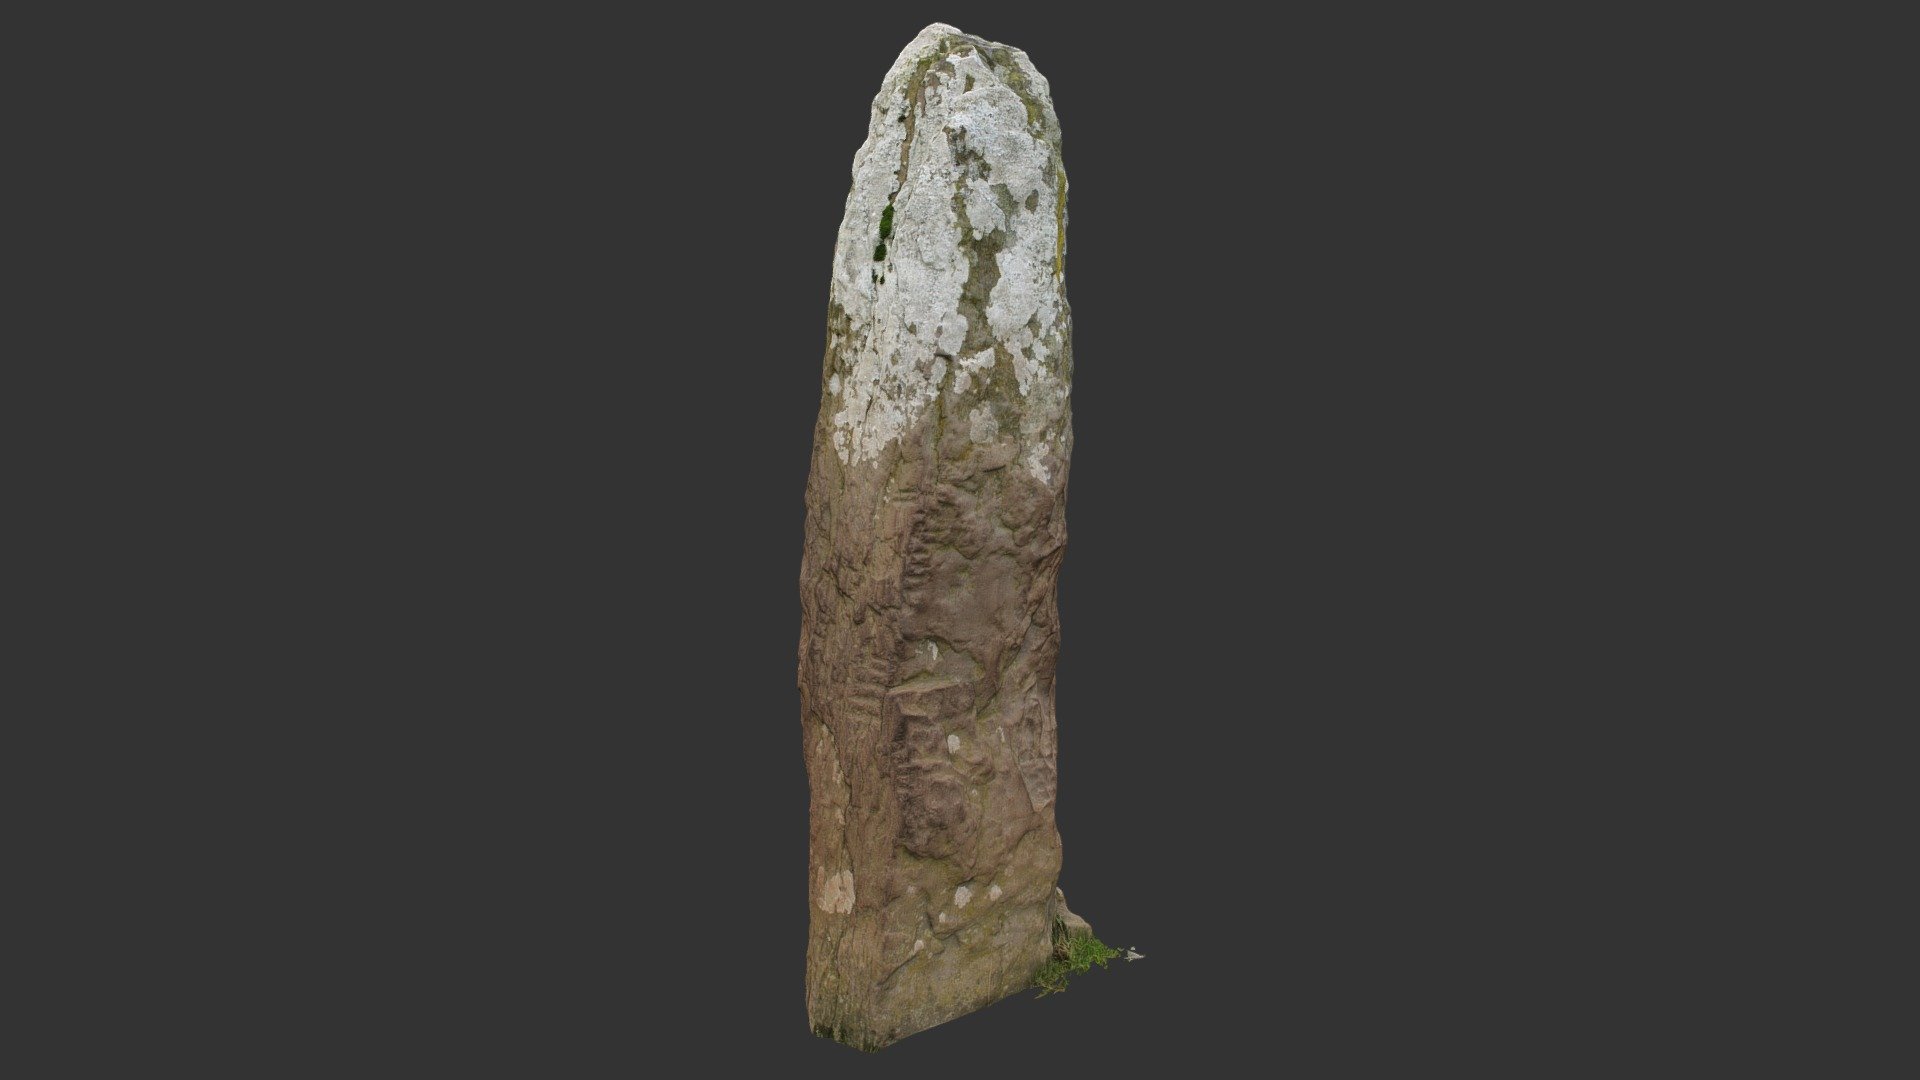 Glenawillin ogham stone